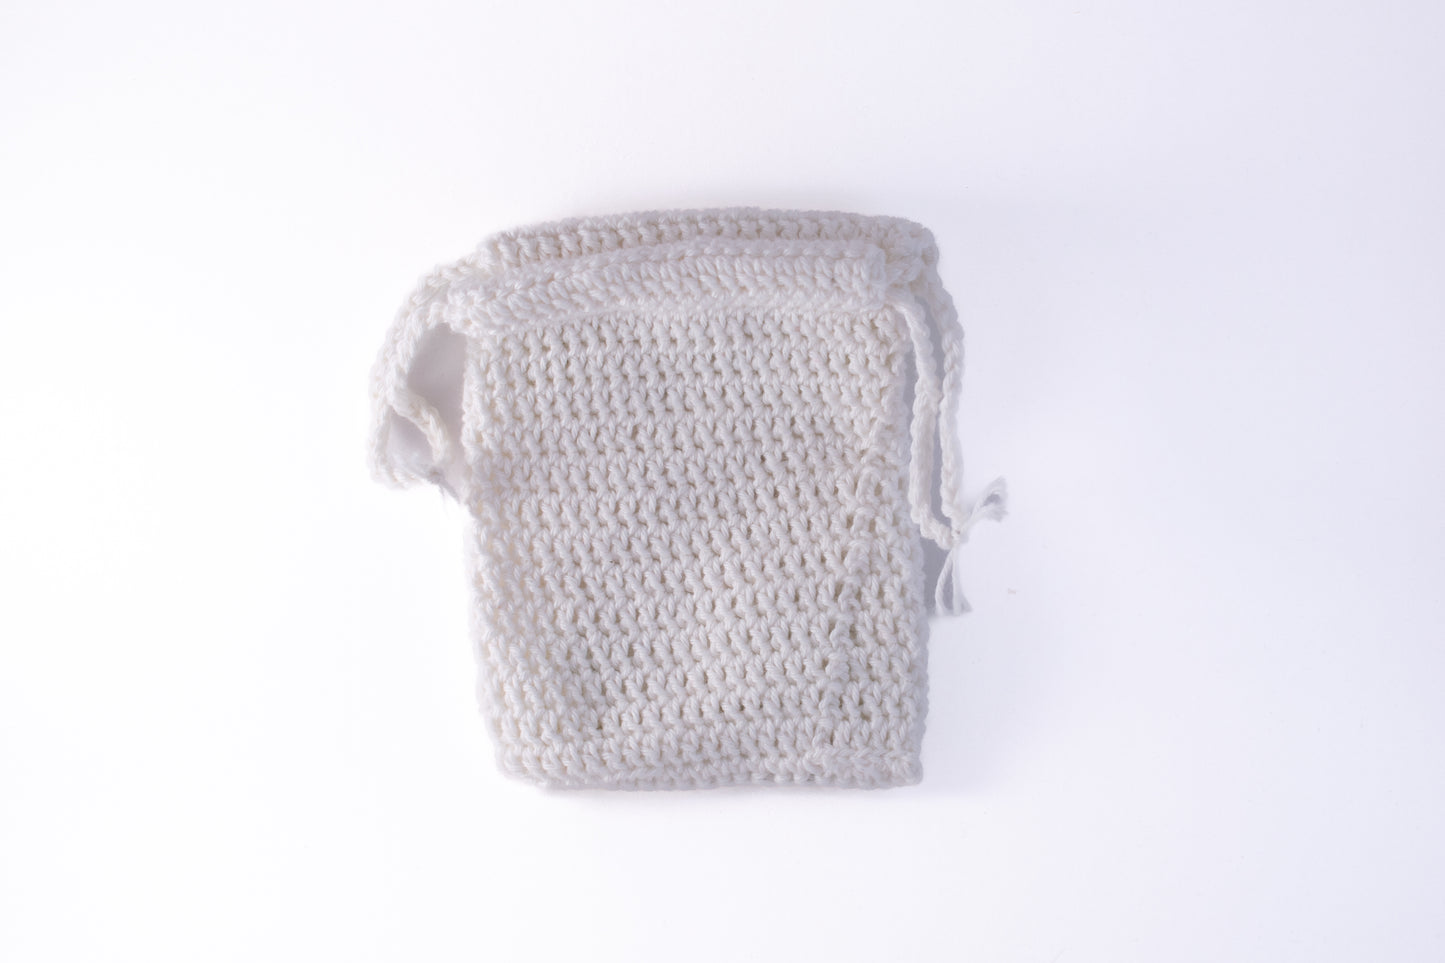 The Stitchery - Crocheted Soap Saver/Scrubber